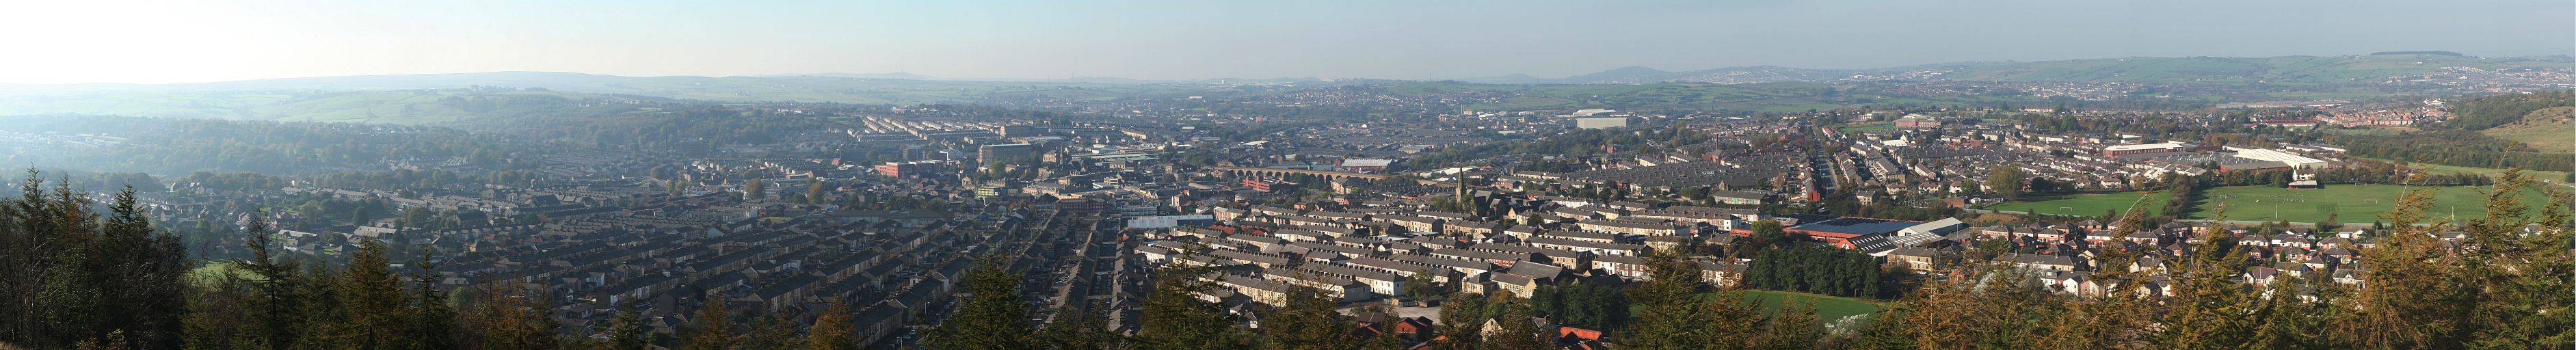 Panorama miasta Accrington, Lancashire ze wzgrza Hillock Vale